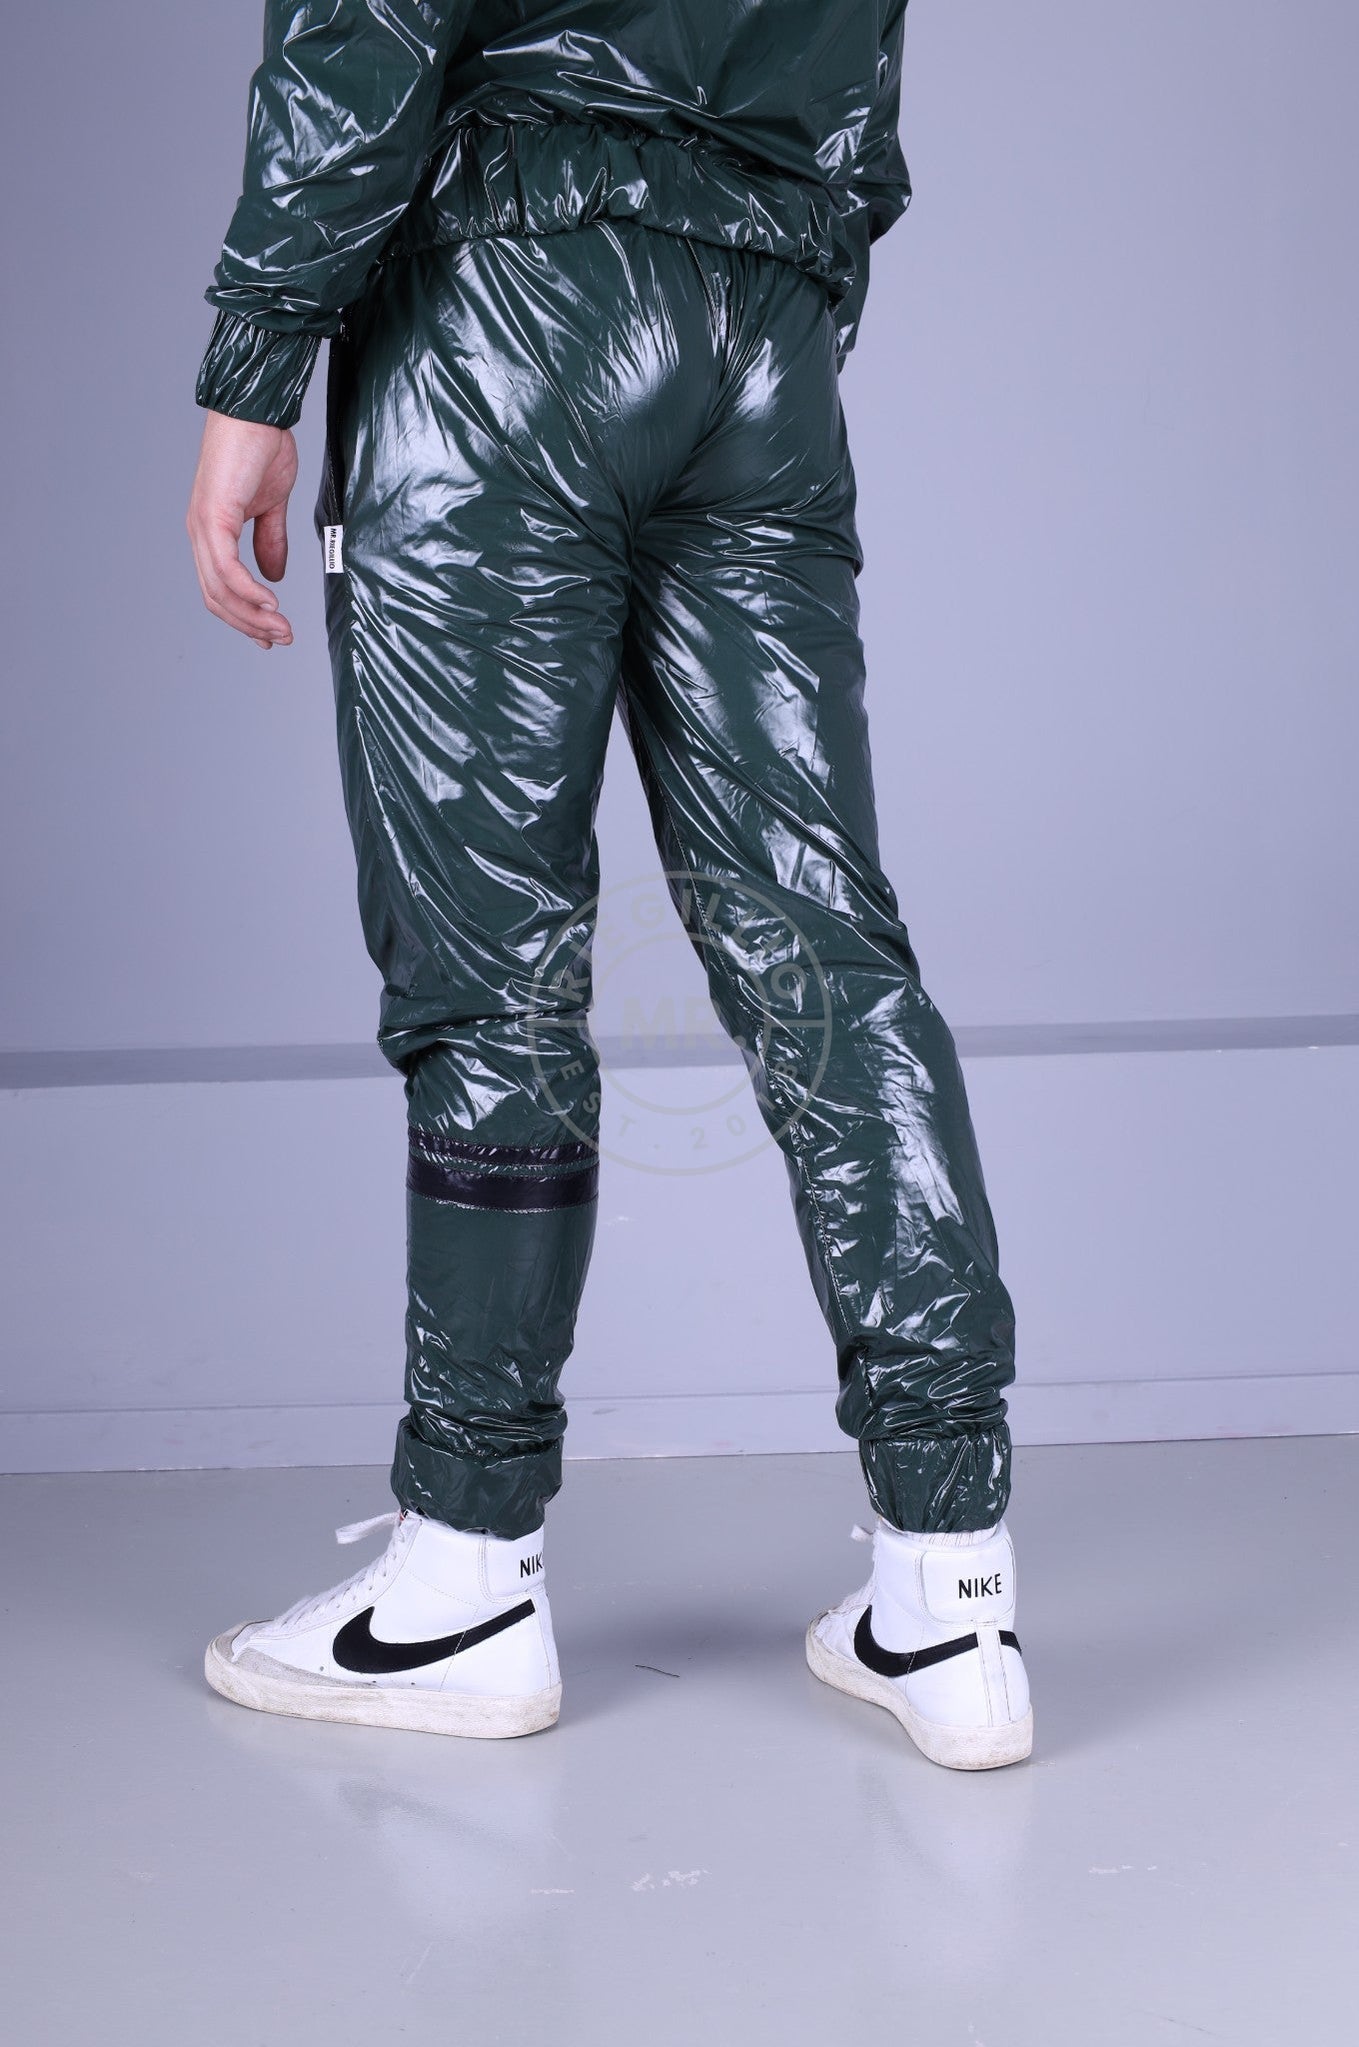 Shiny Nylon Tracksuit Pants - Dark Green by MR. Riegillio